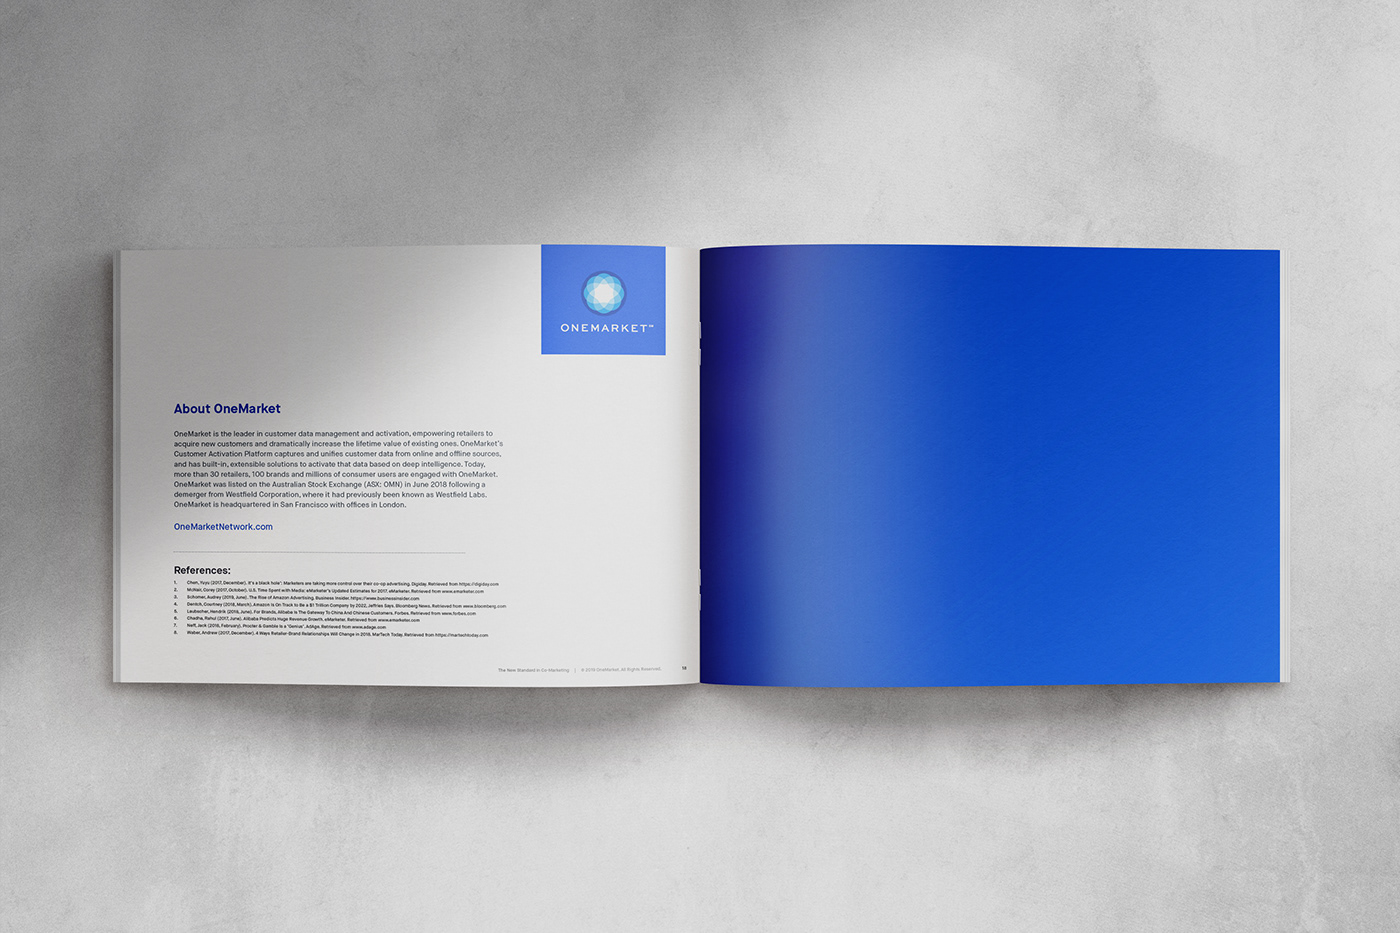 whitepaper ebook print digital magazine tech start-up